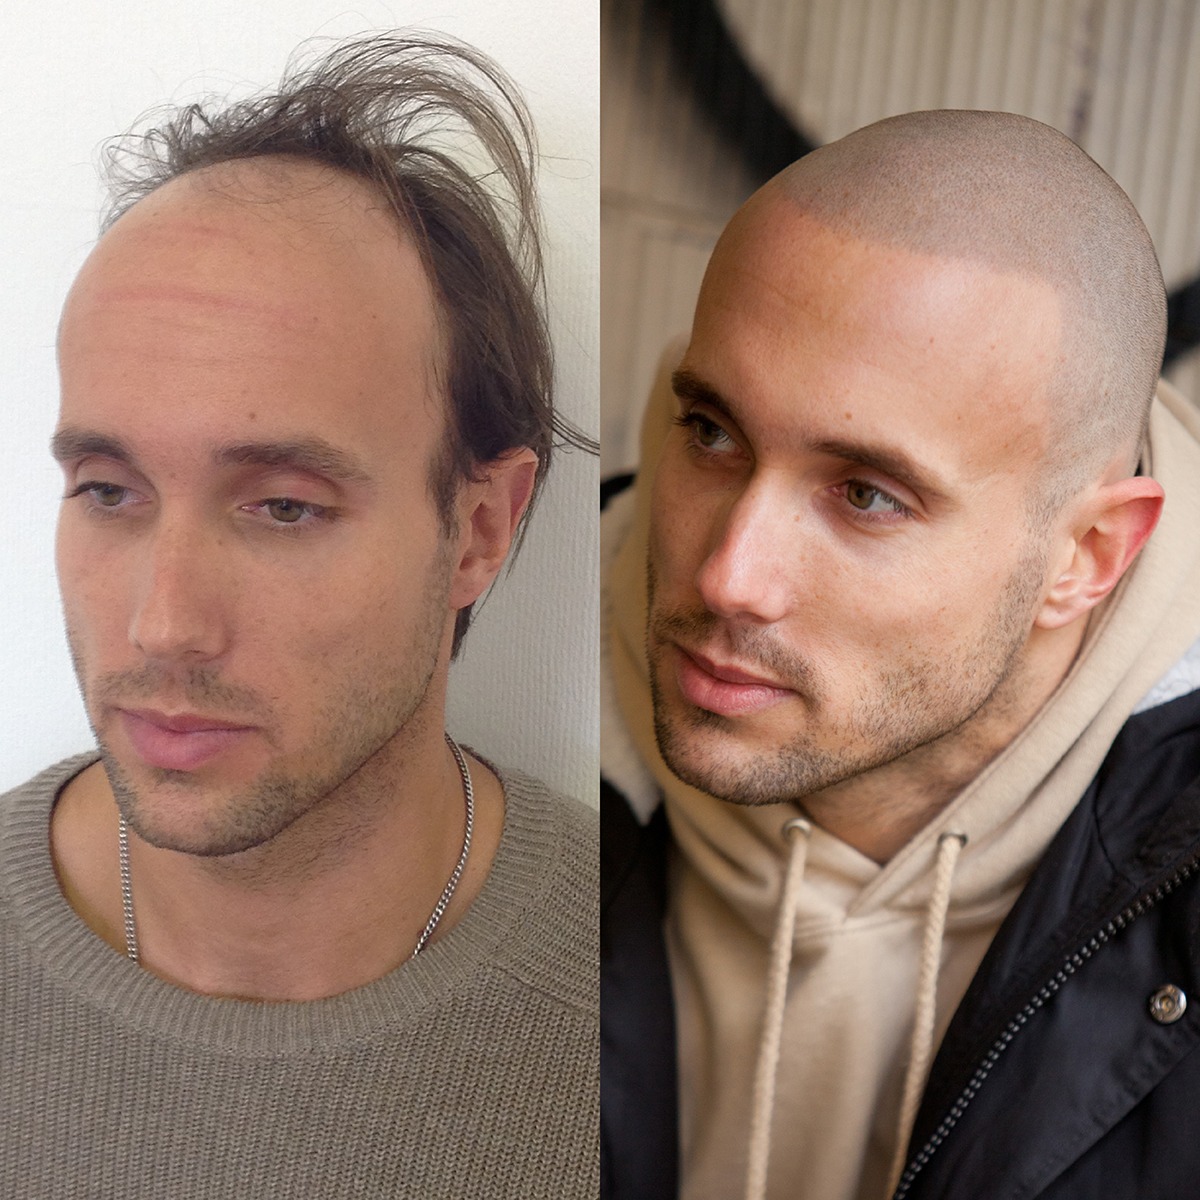 shiny scalps is a big problem among bald men